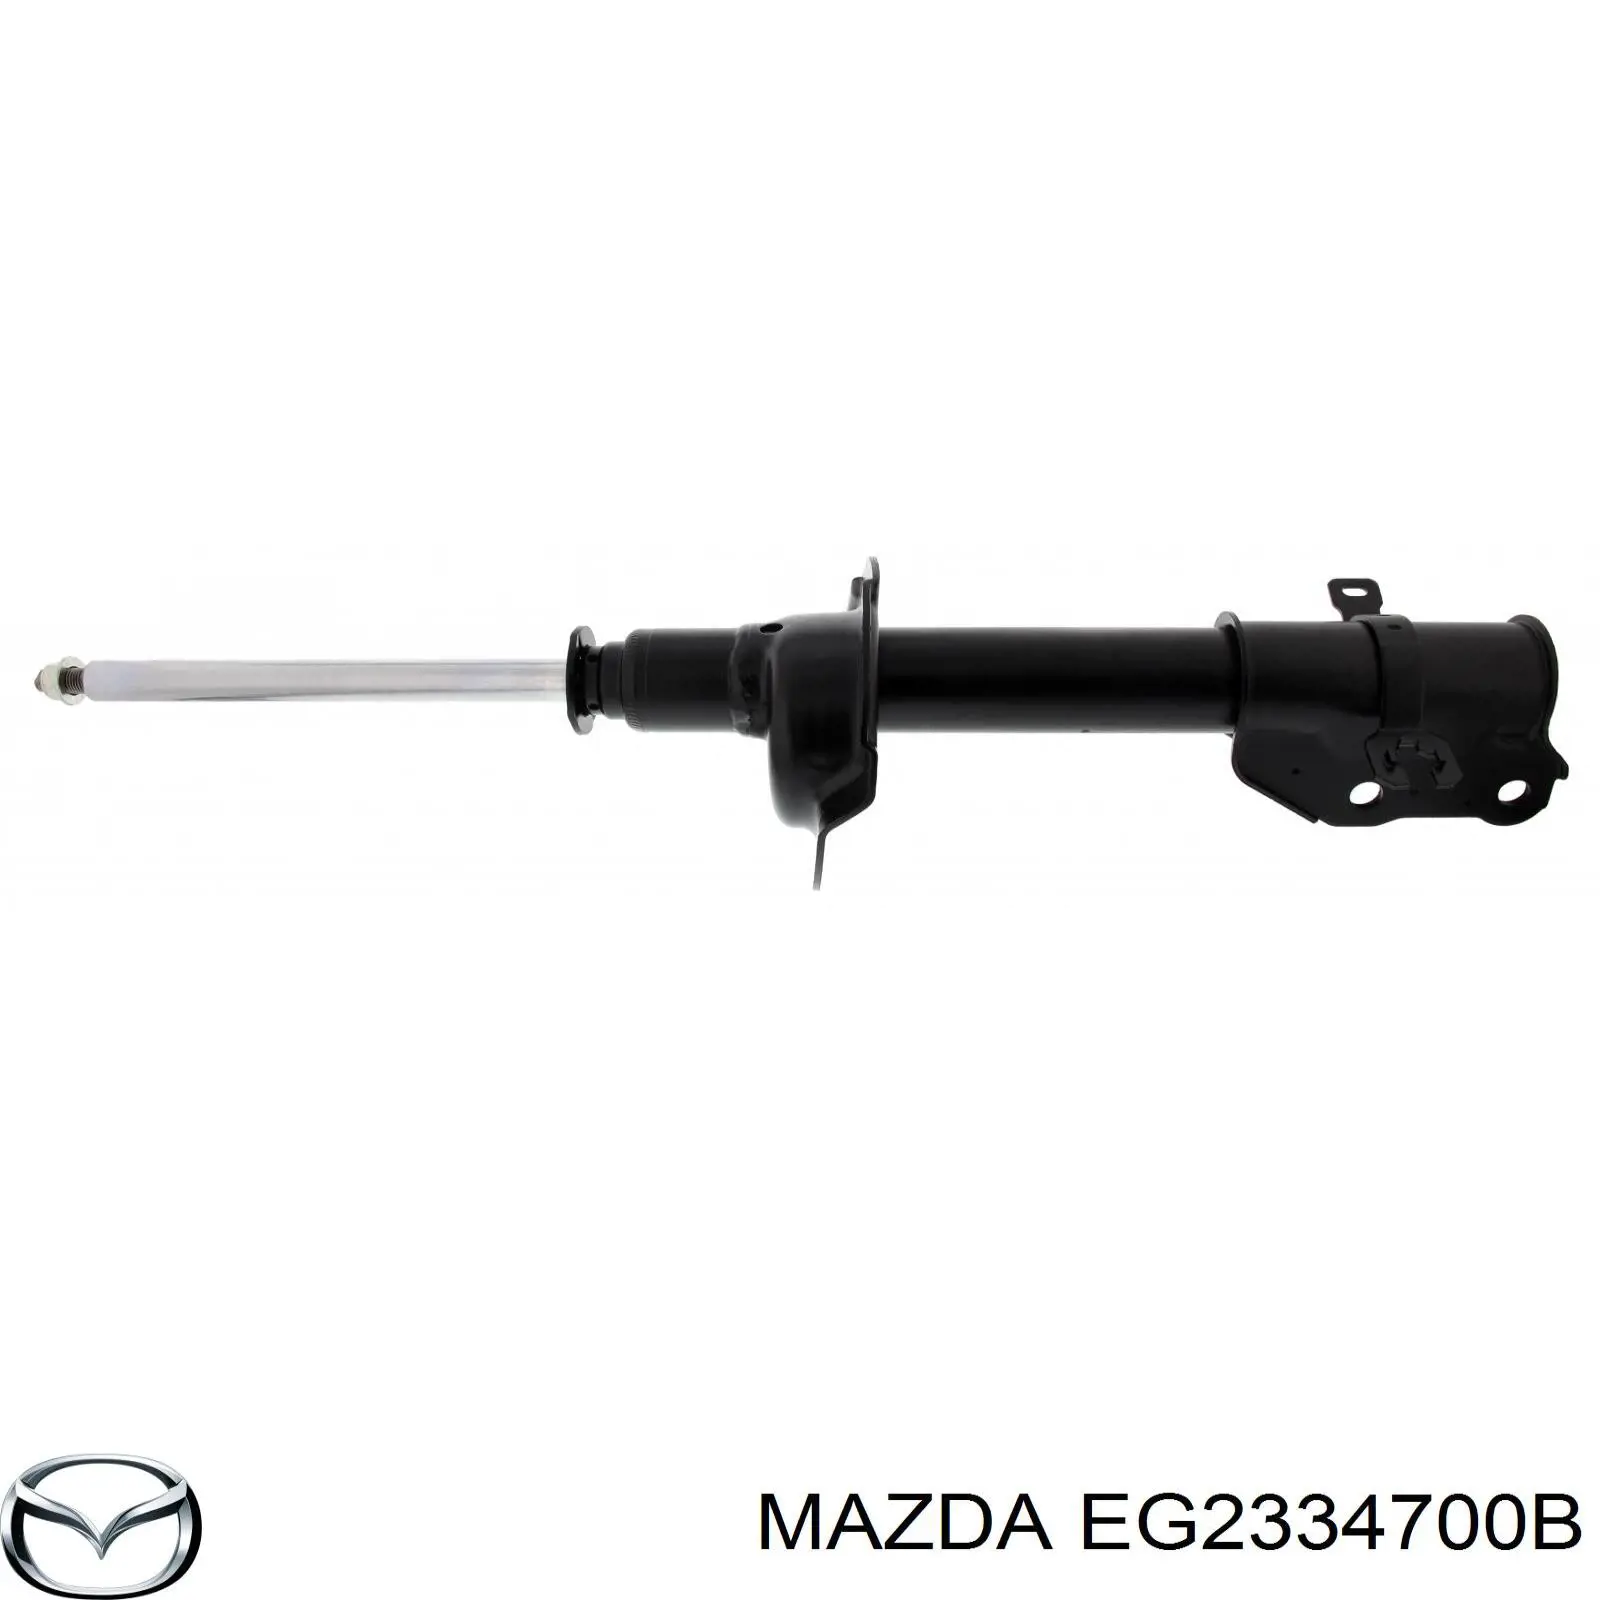 EG2334700B Mazda amortiguador delantero derecho